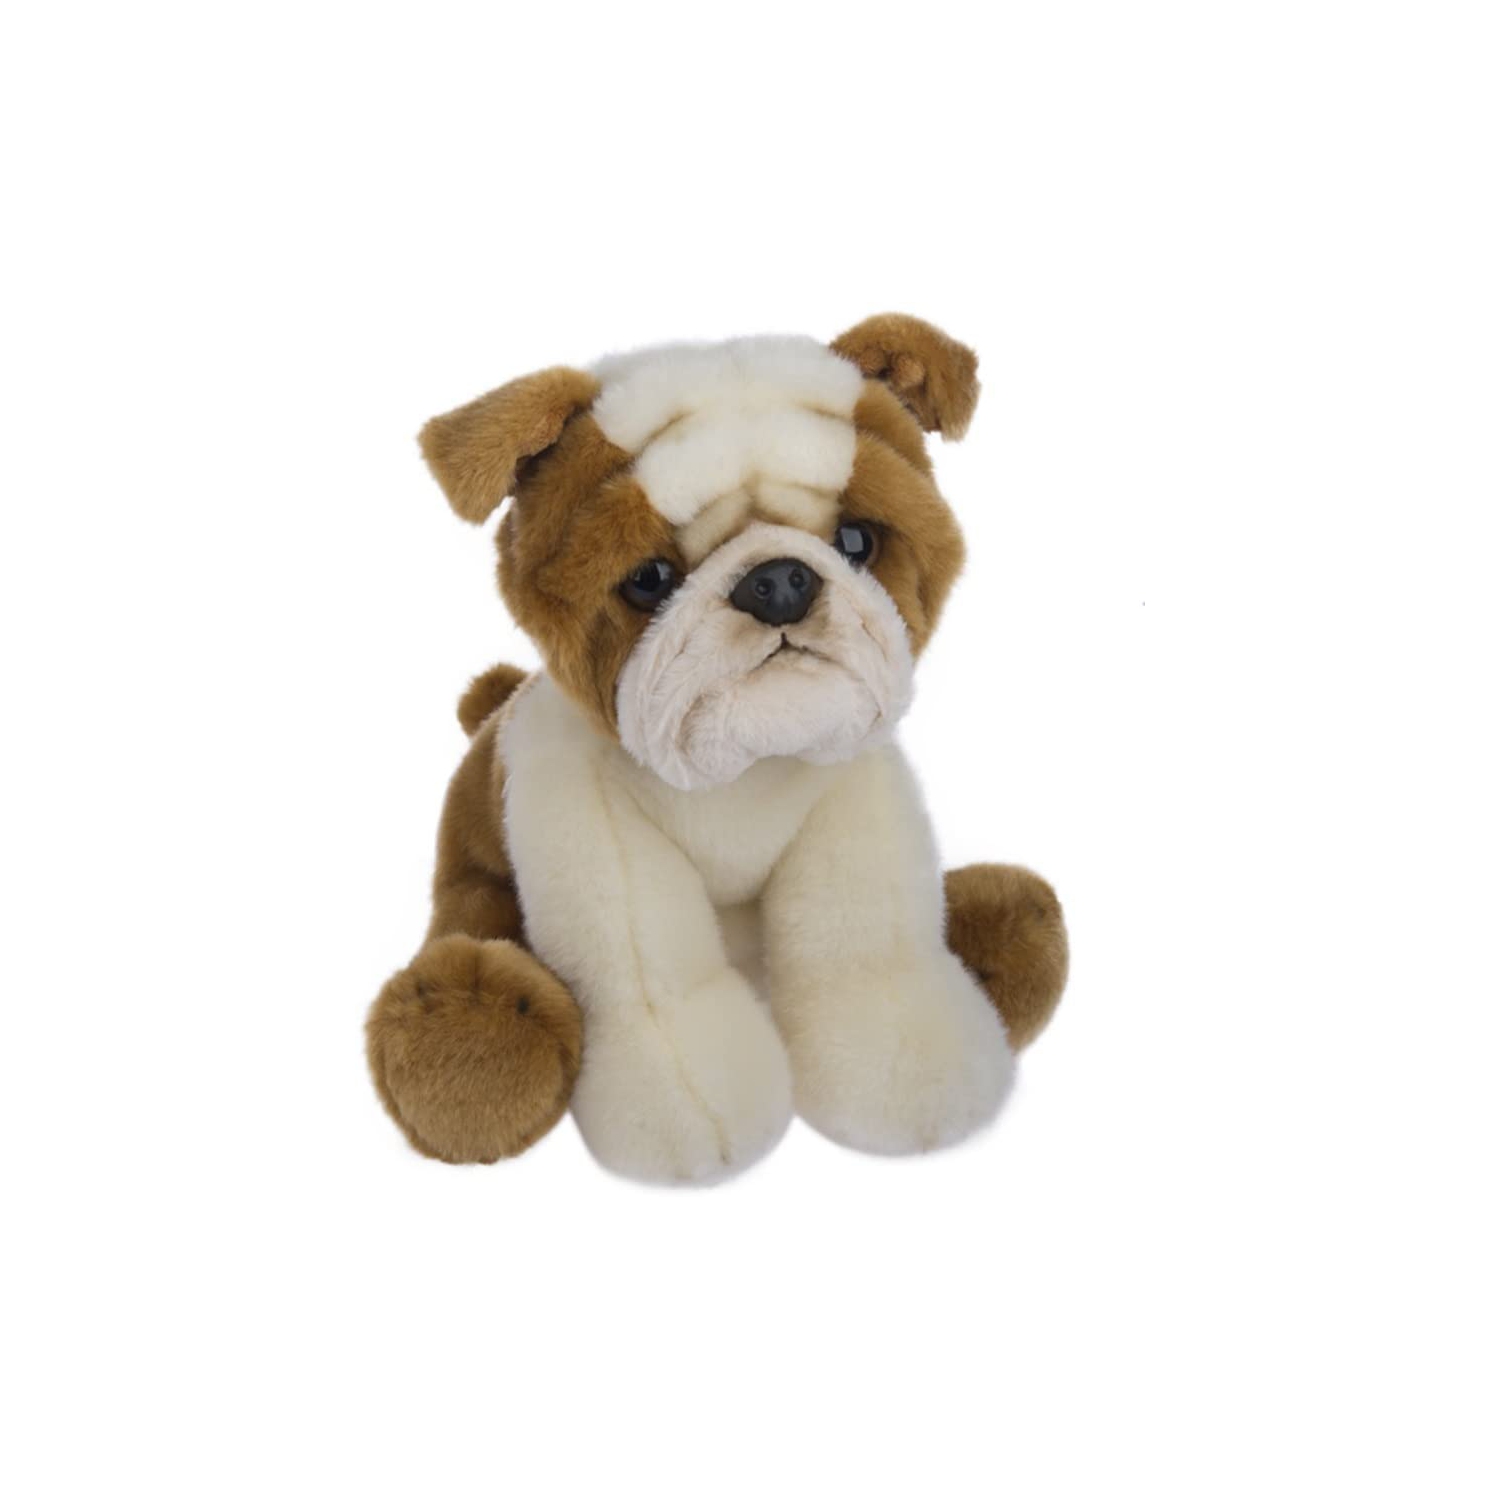 Classier Ganz Heritage Coll. Baby Boy Girl Plush Stuffed Animal Toy Dog - Bulldog